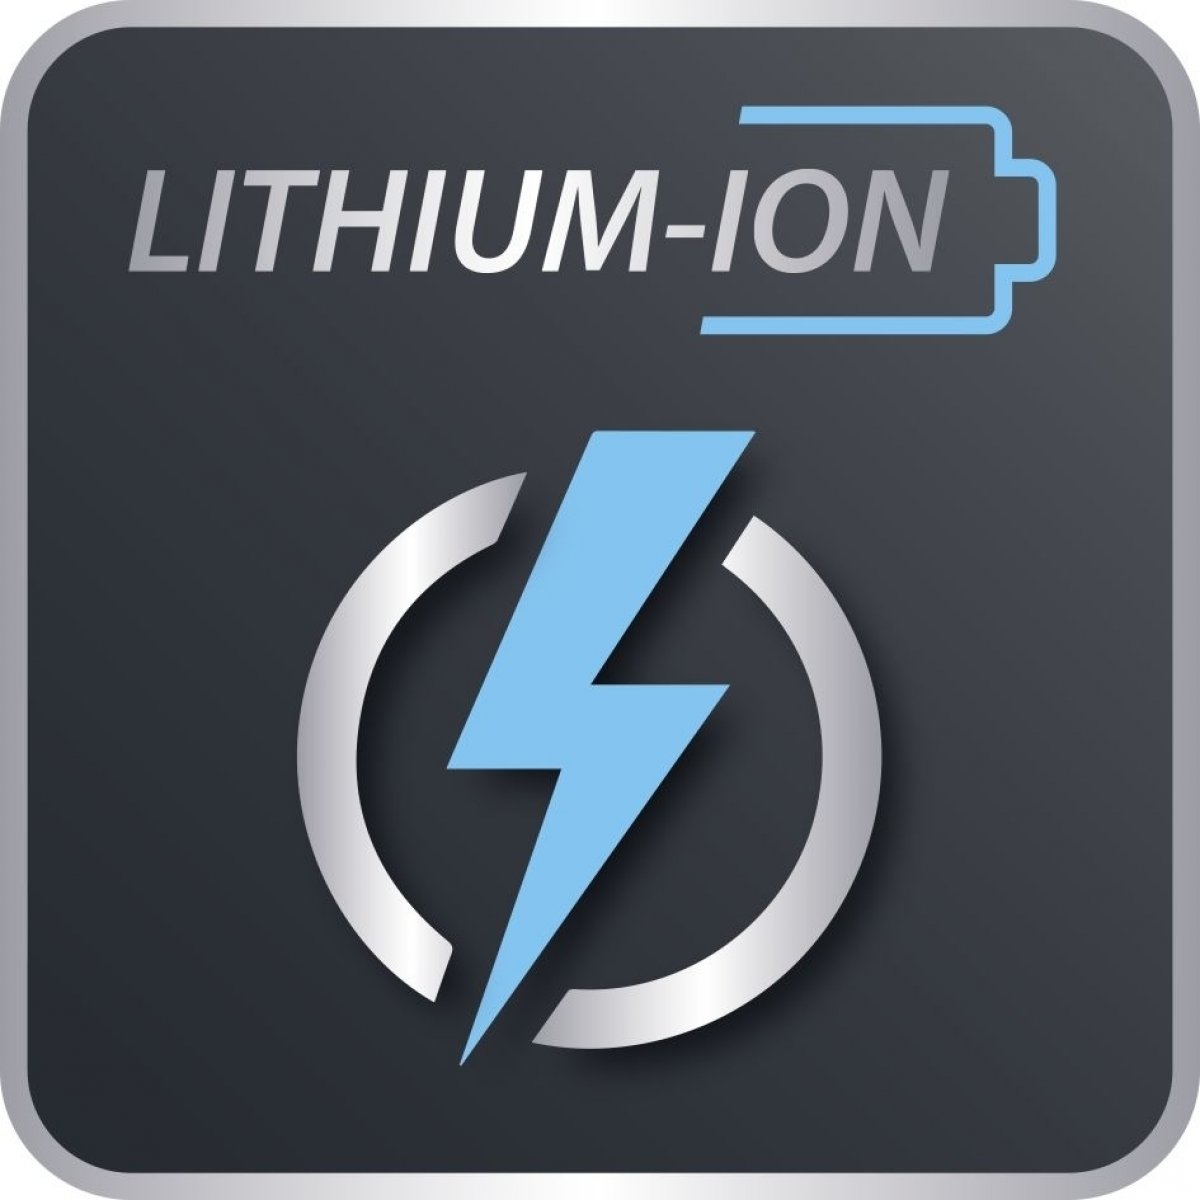 Lithium-iontová baterie s dlouhou výdrží